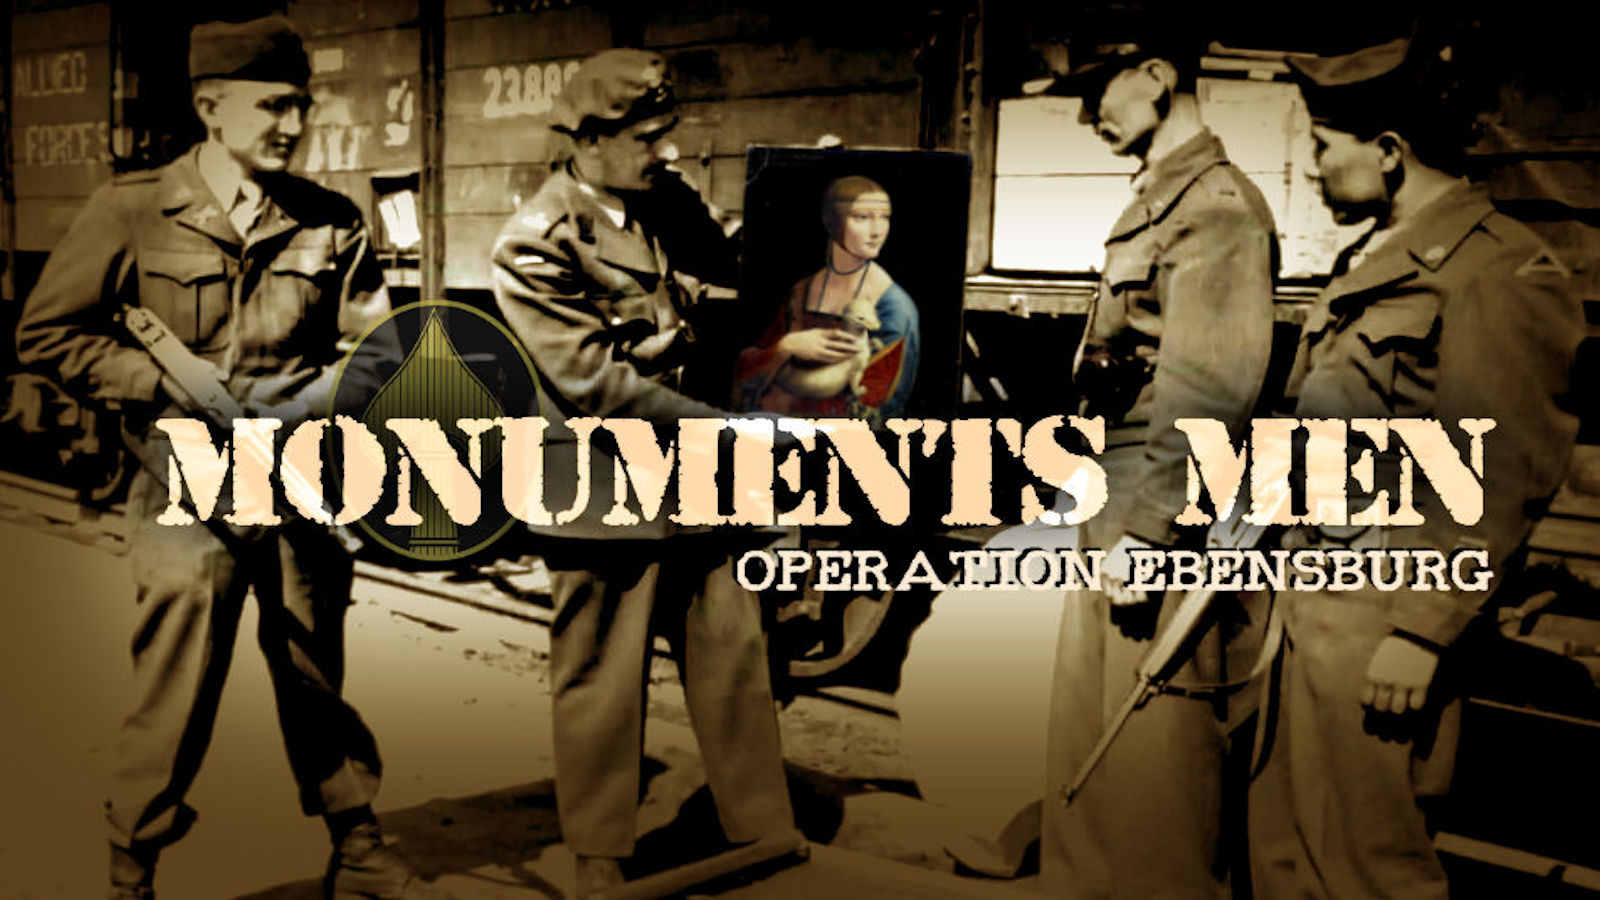 Monuments Men: Operation Ebensburg